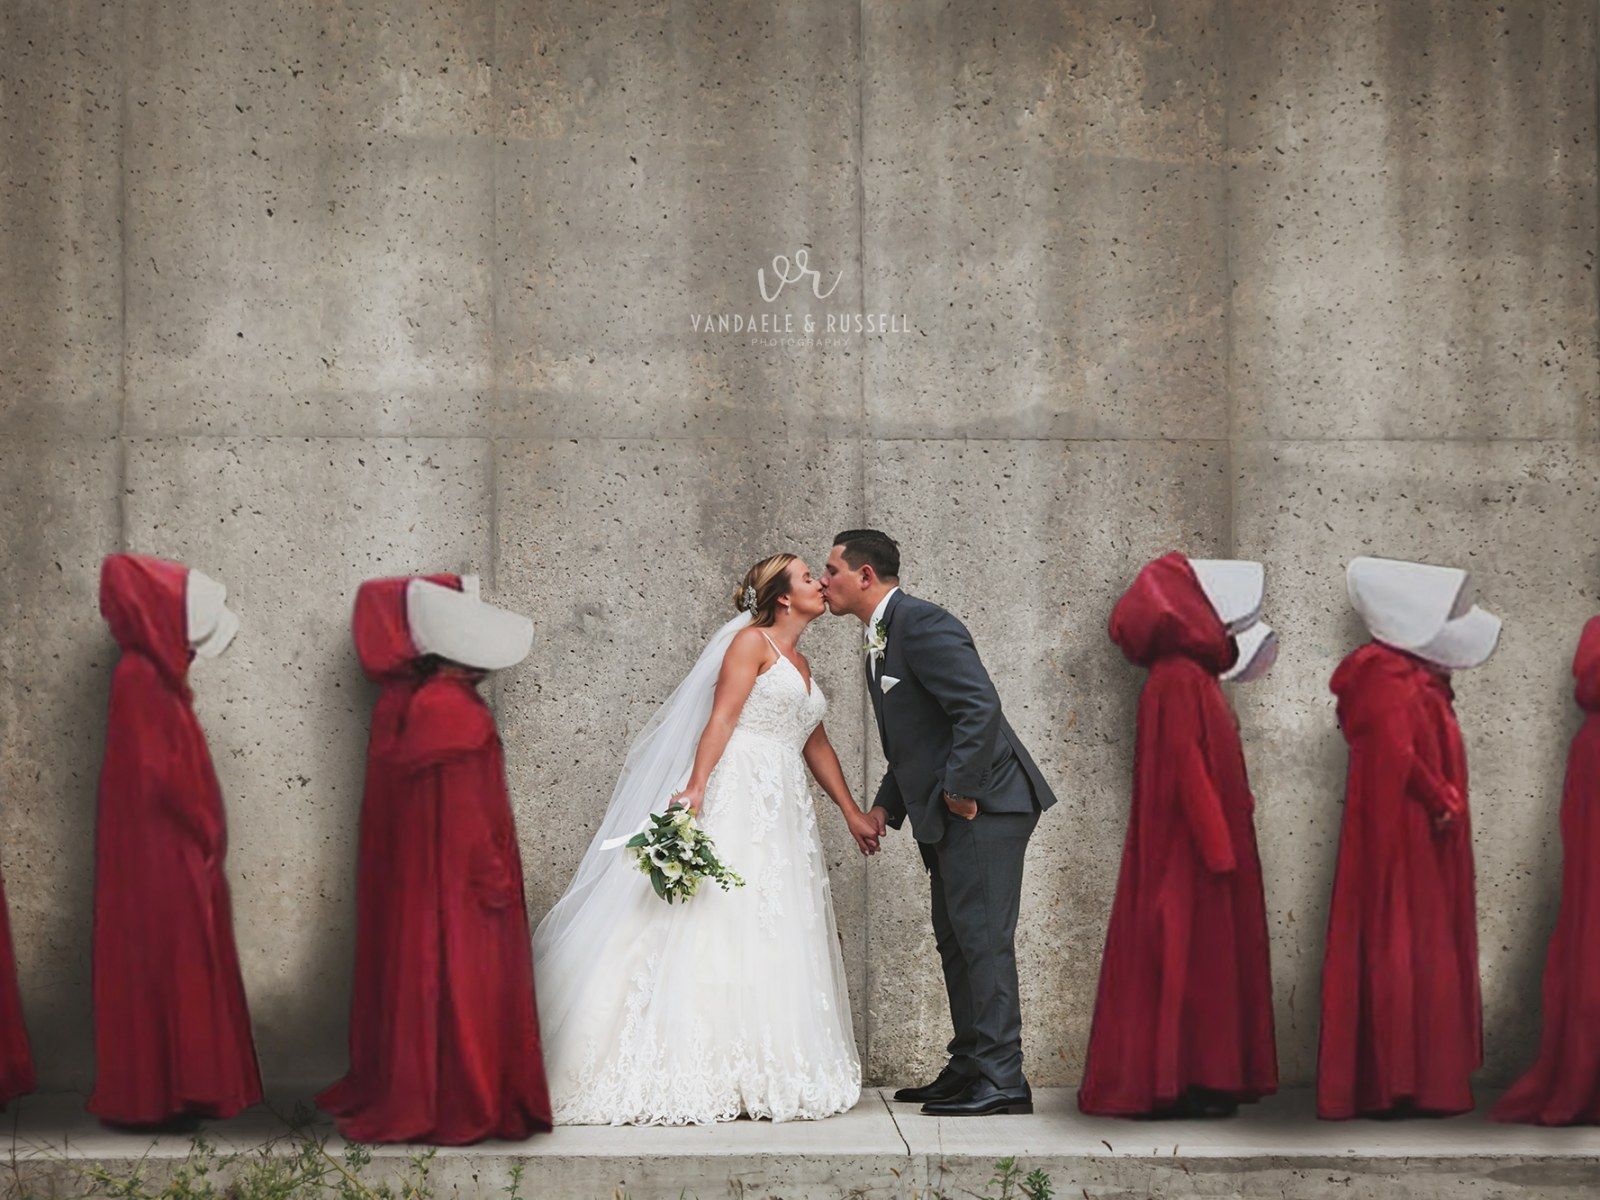 Viral 'Handmaid's Tale' Wedding Photo Ignites The Internet